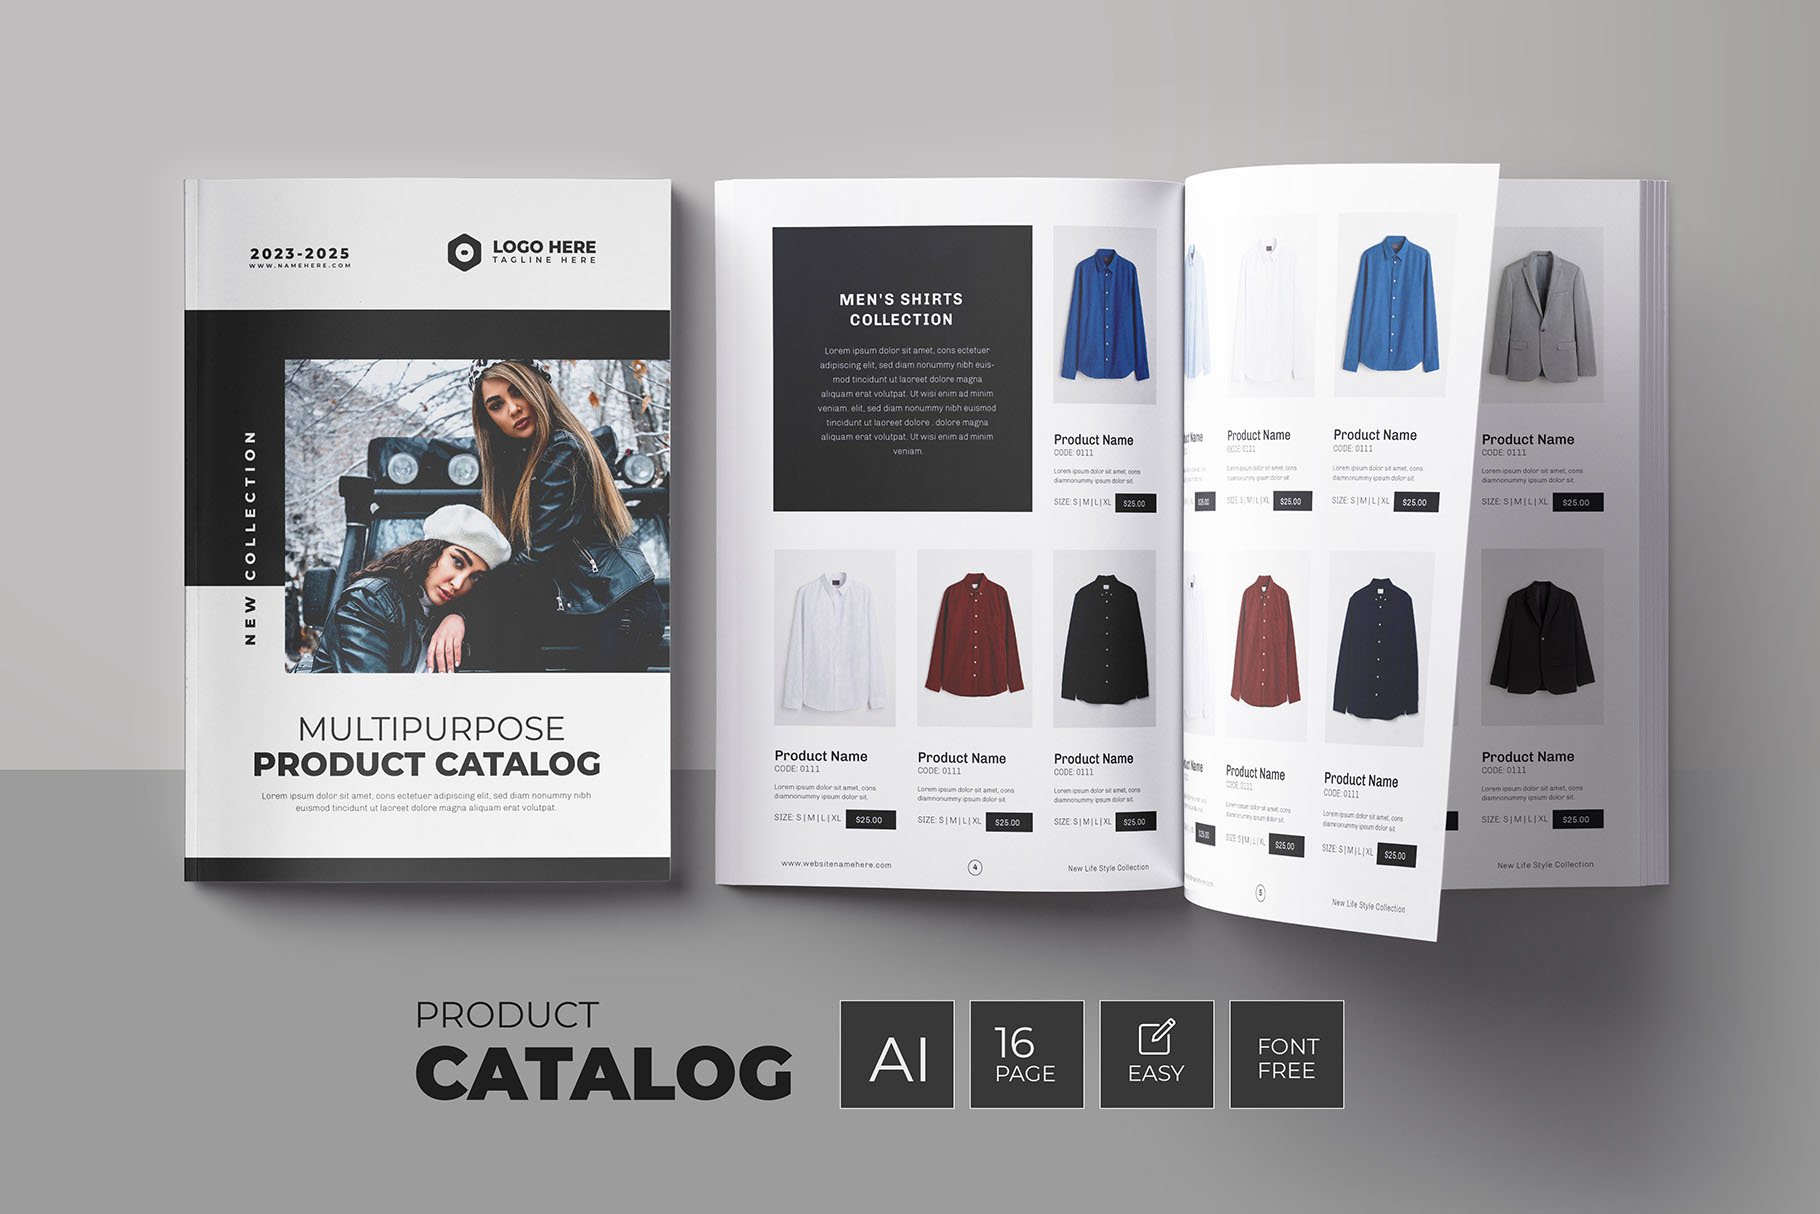 Multipurpose Product Catalog cover image.